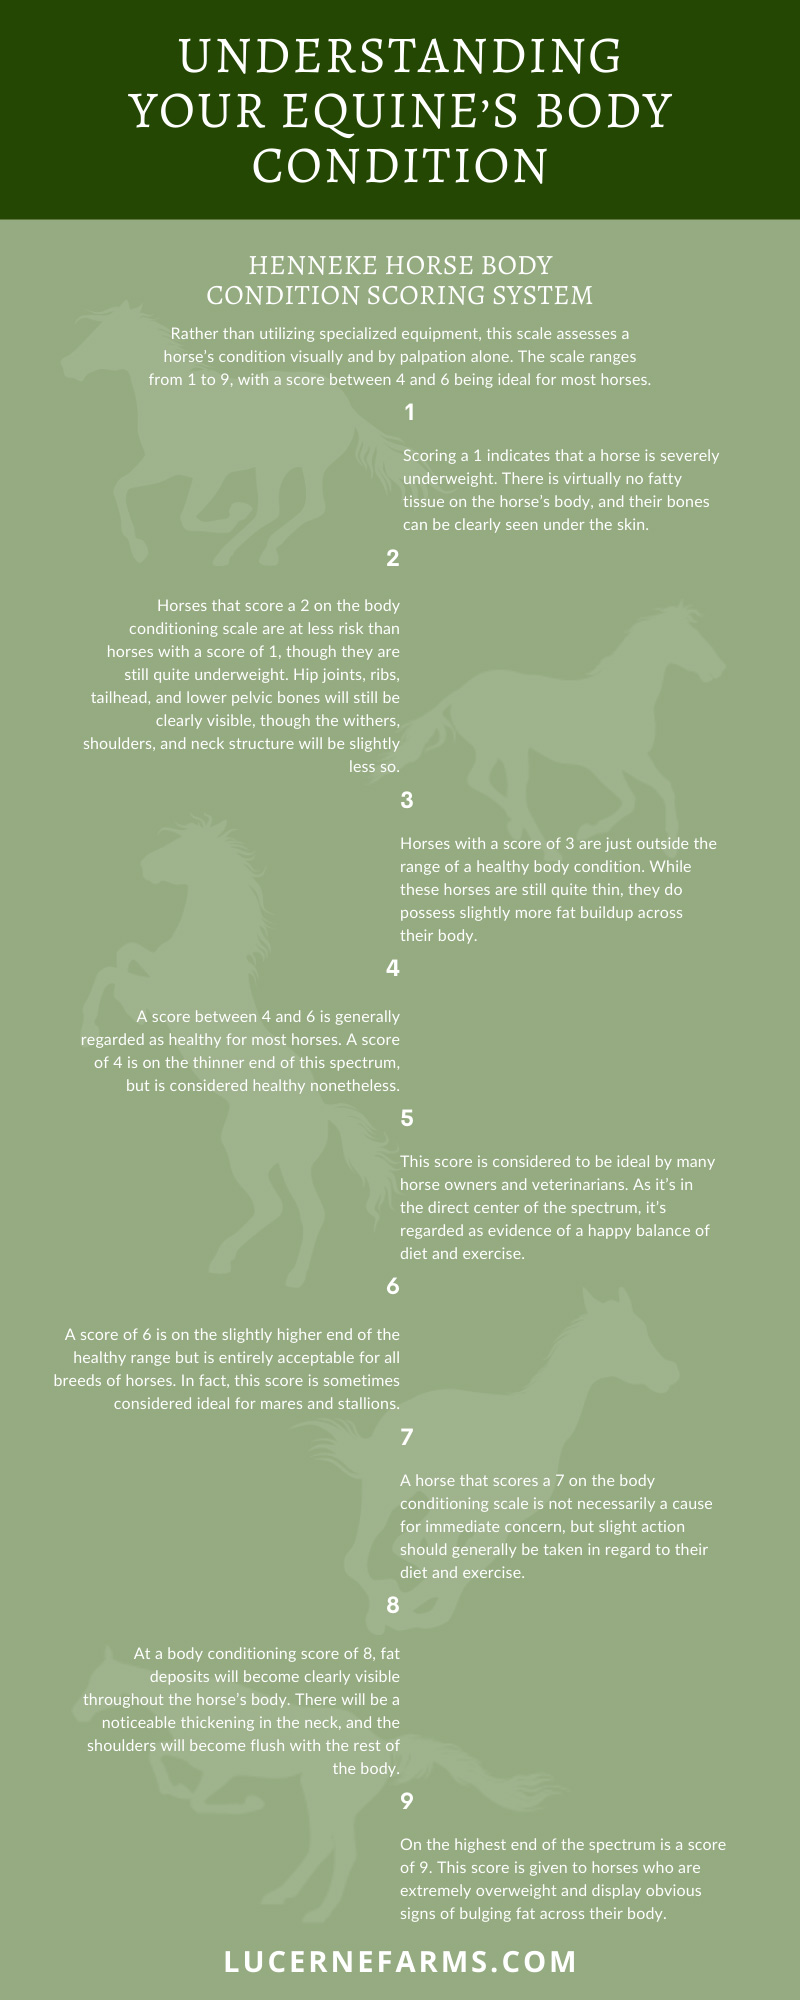 Understanding Your Equine’s Body Condition